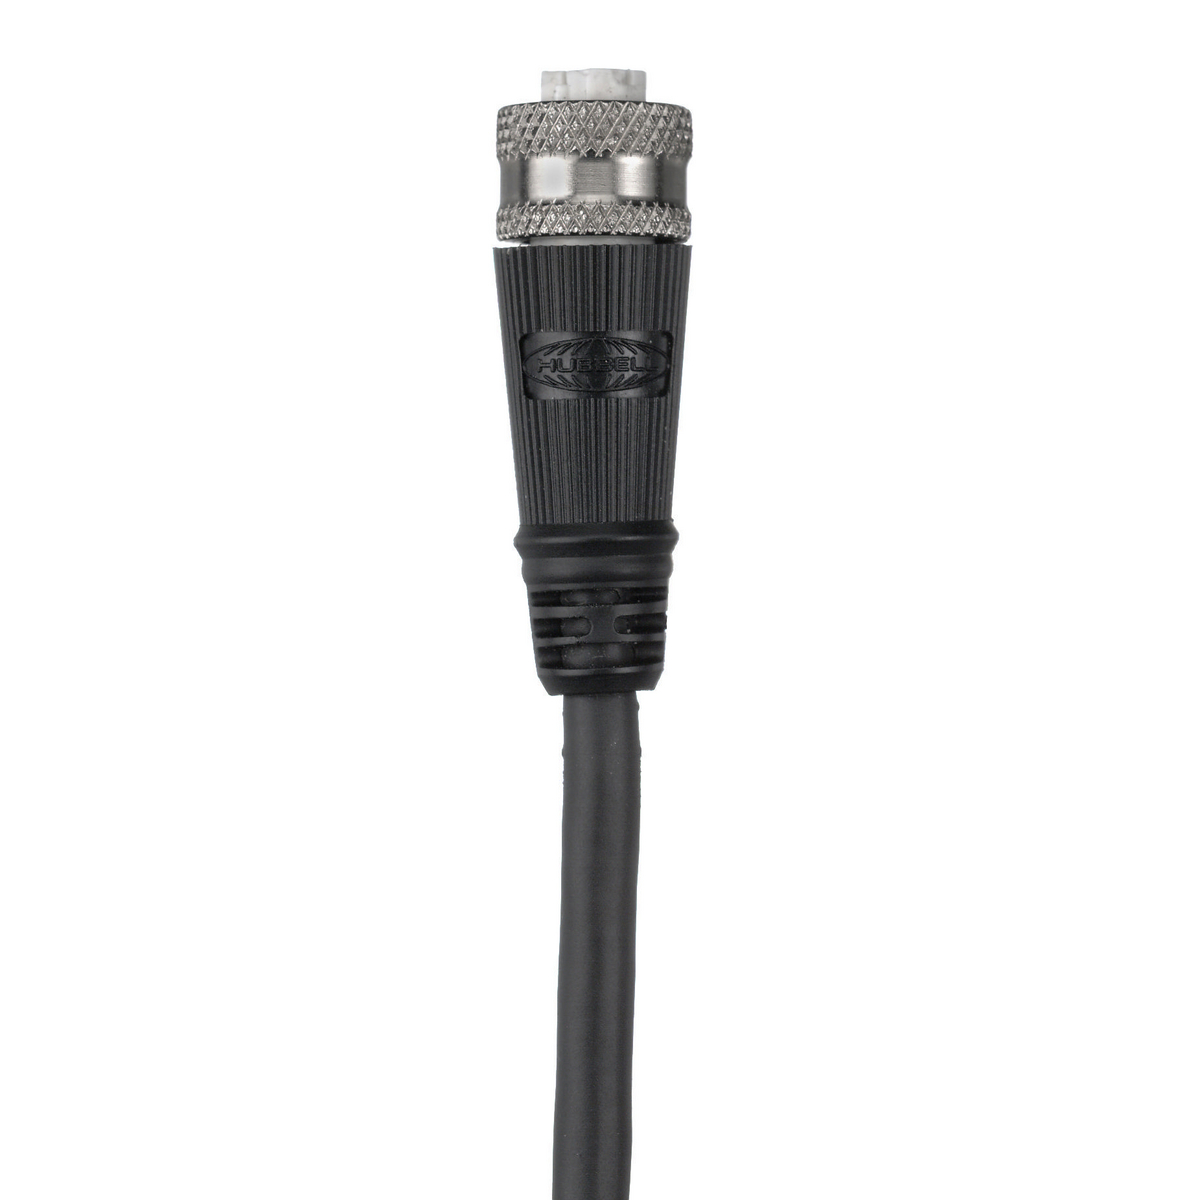 Straight Plug, Female, Single Key, With 15 M Cable, 4 Pole